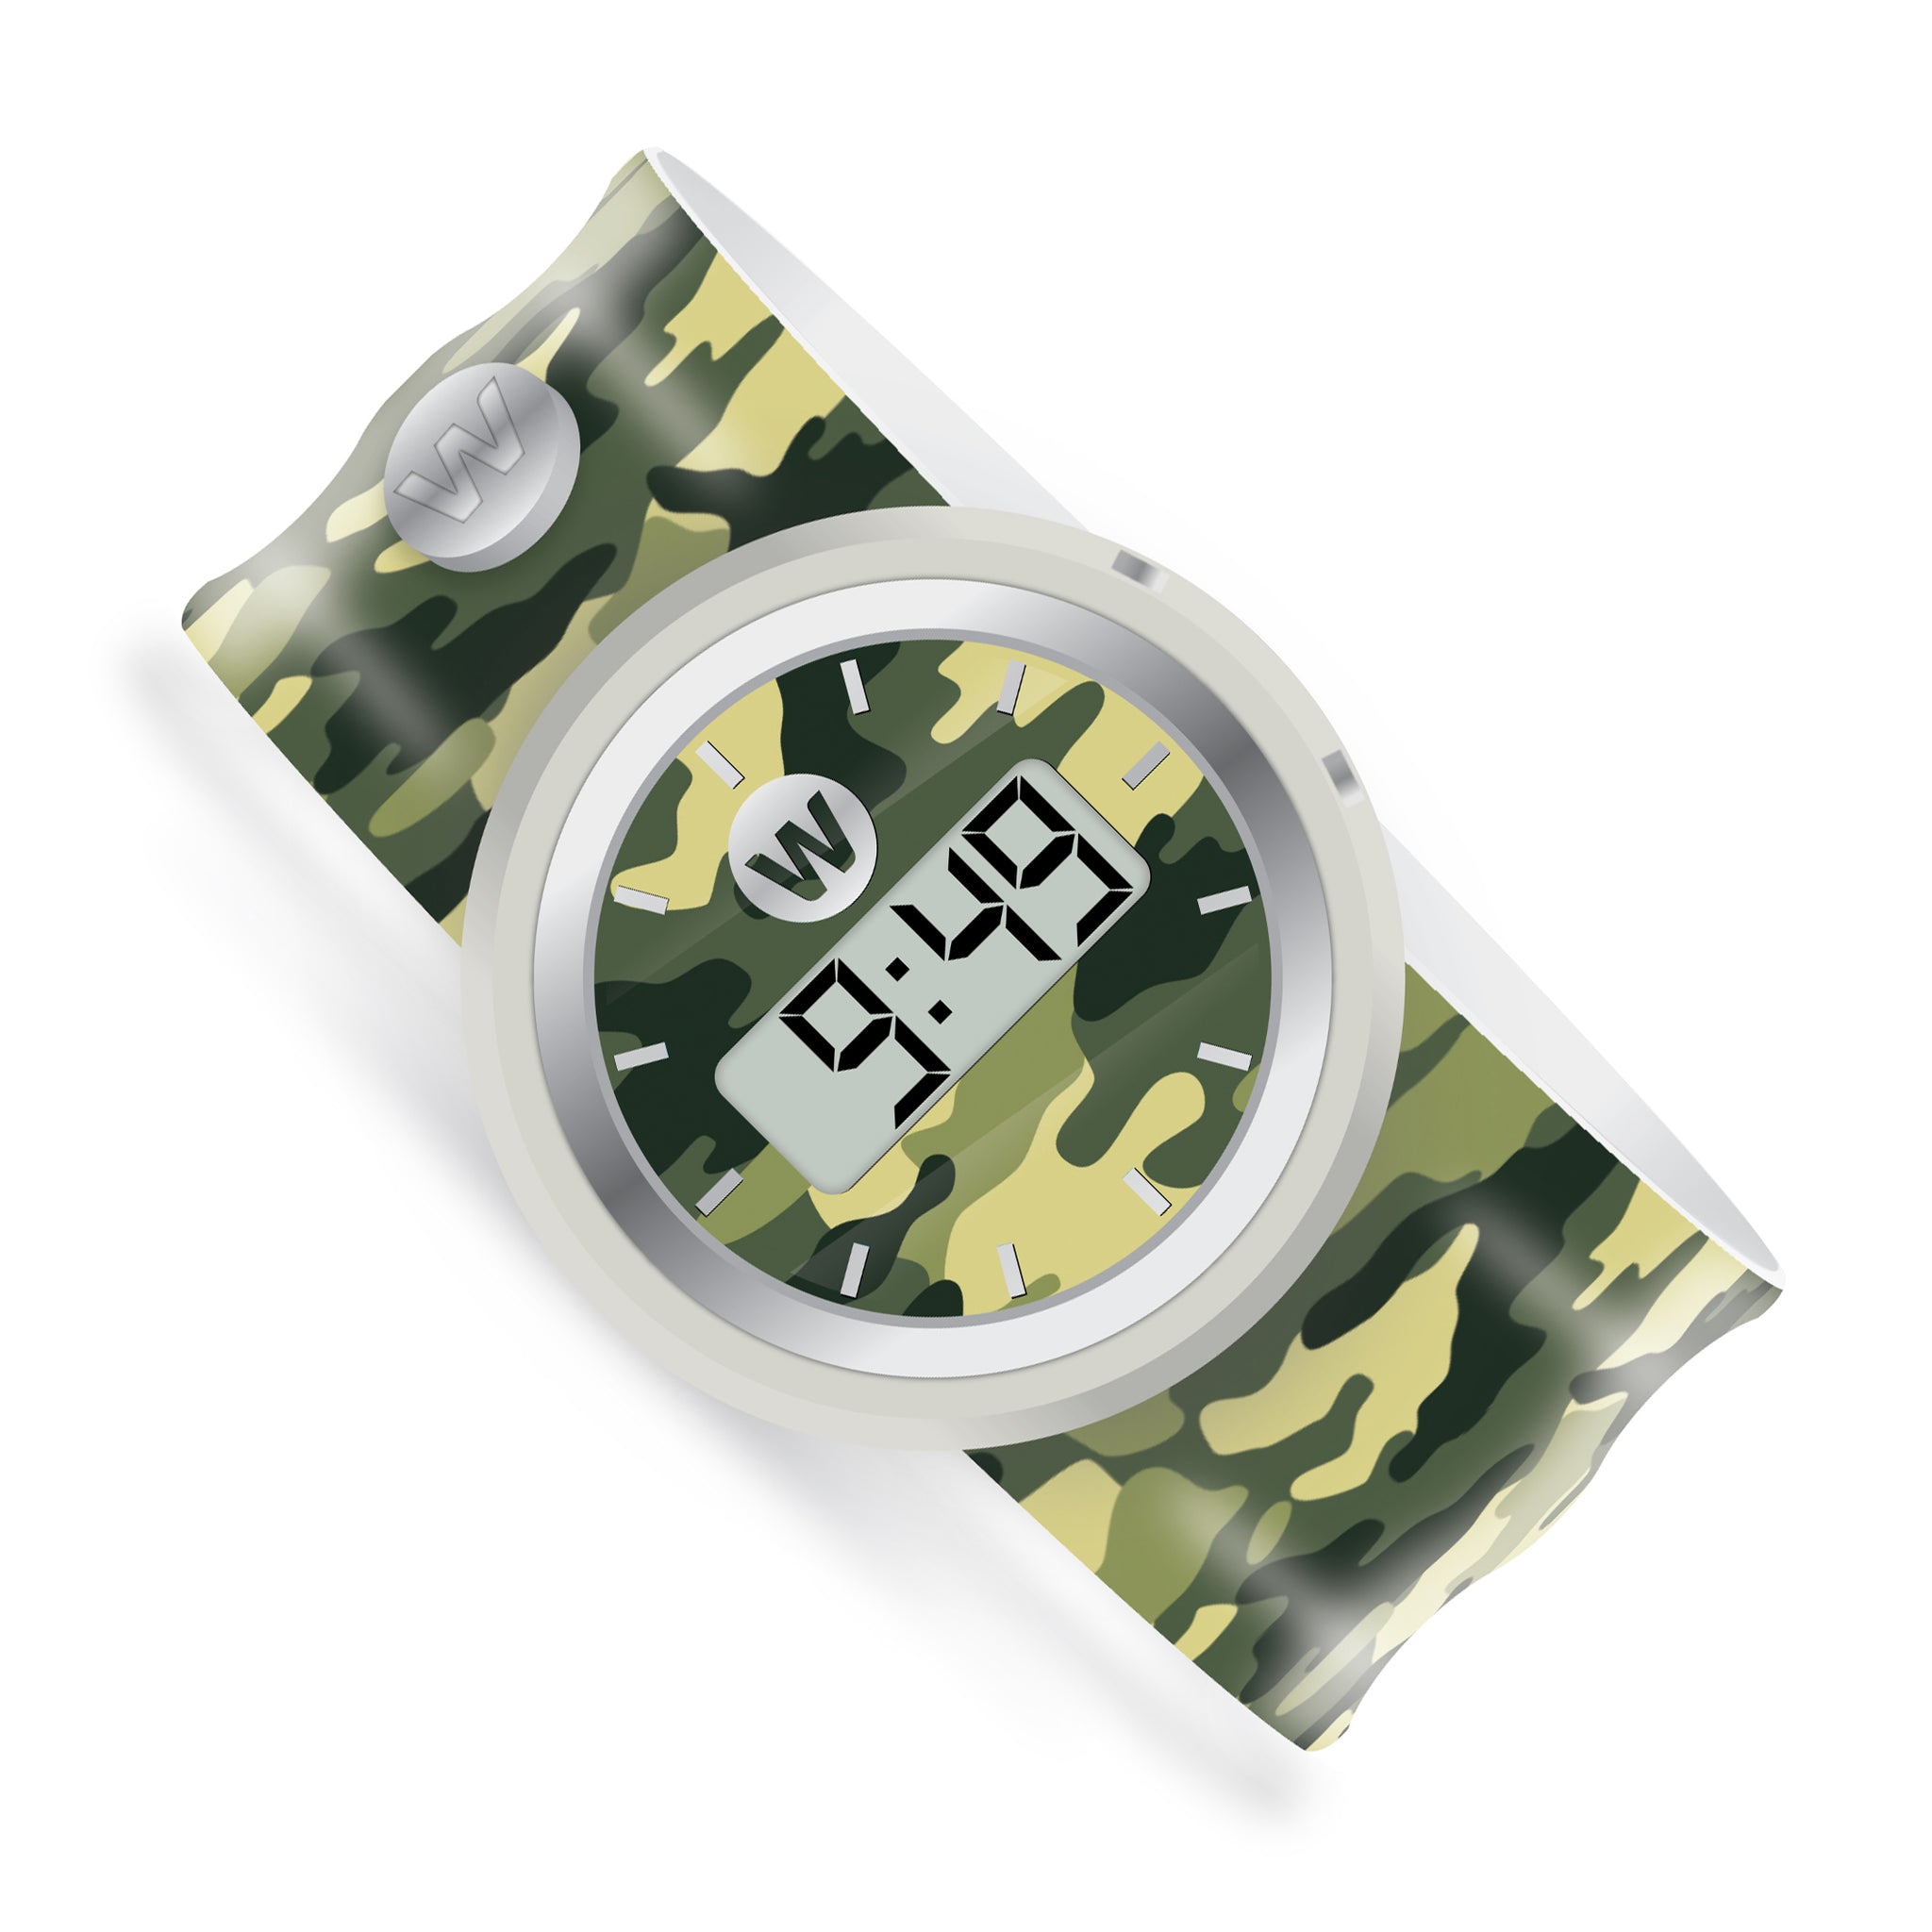 camouflage digital watch